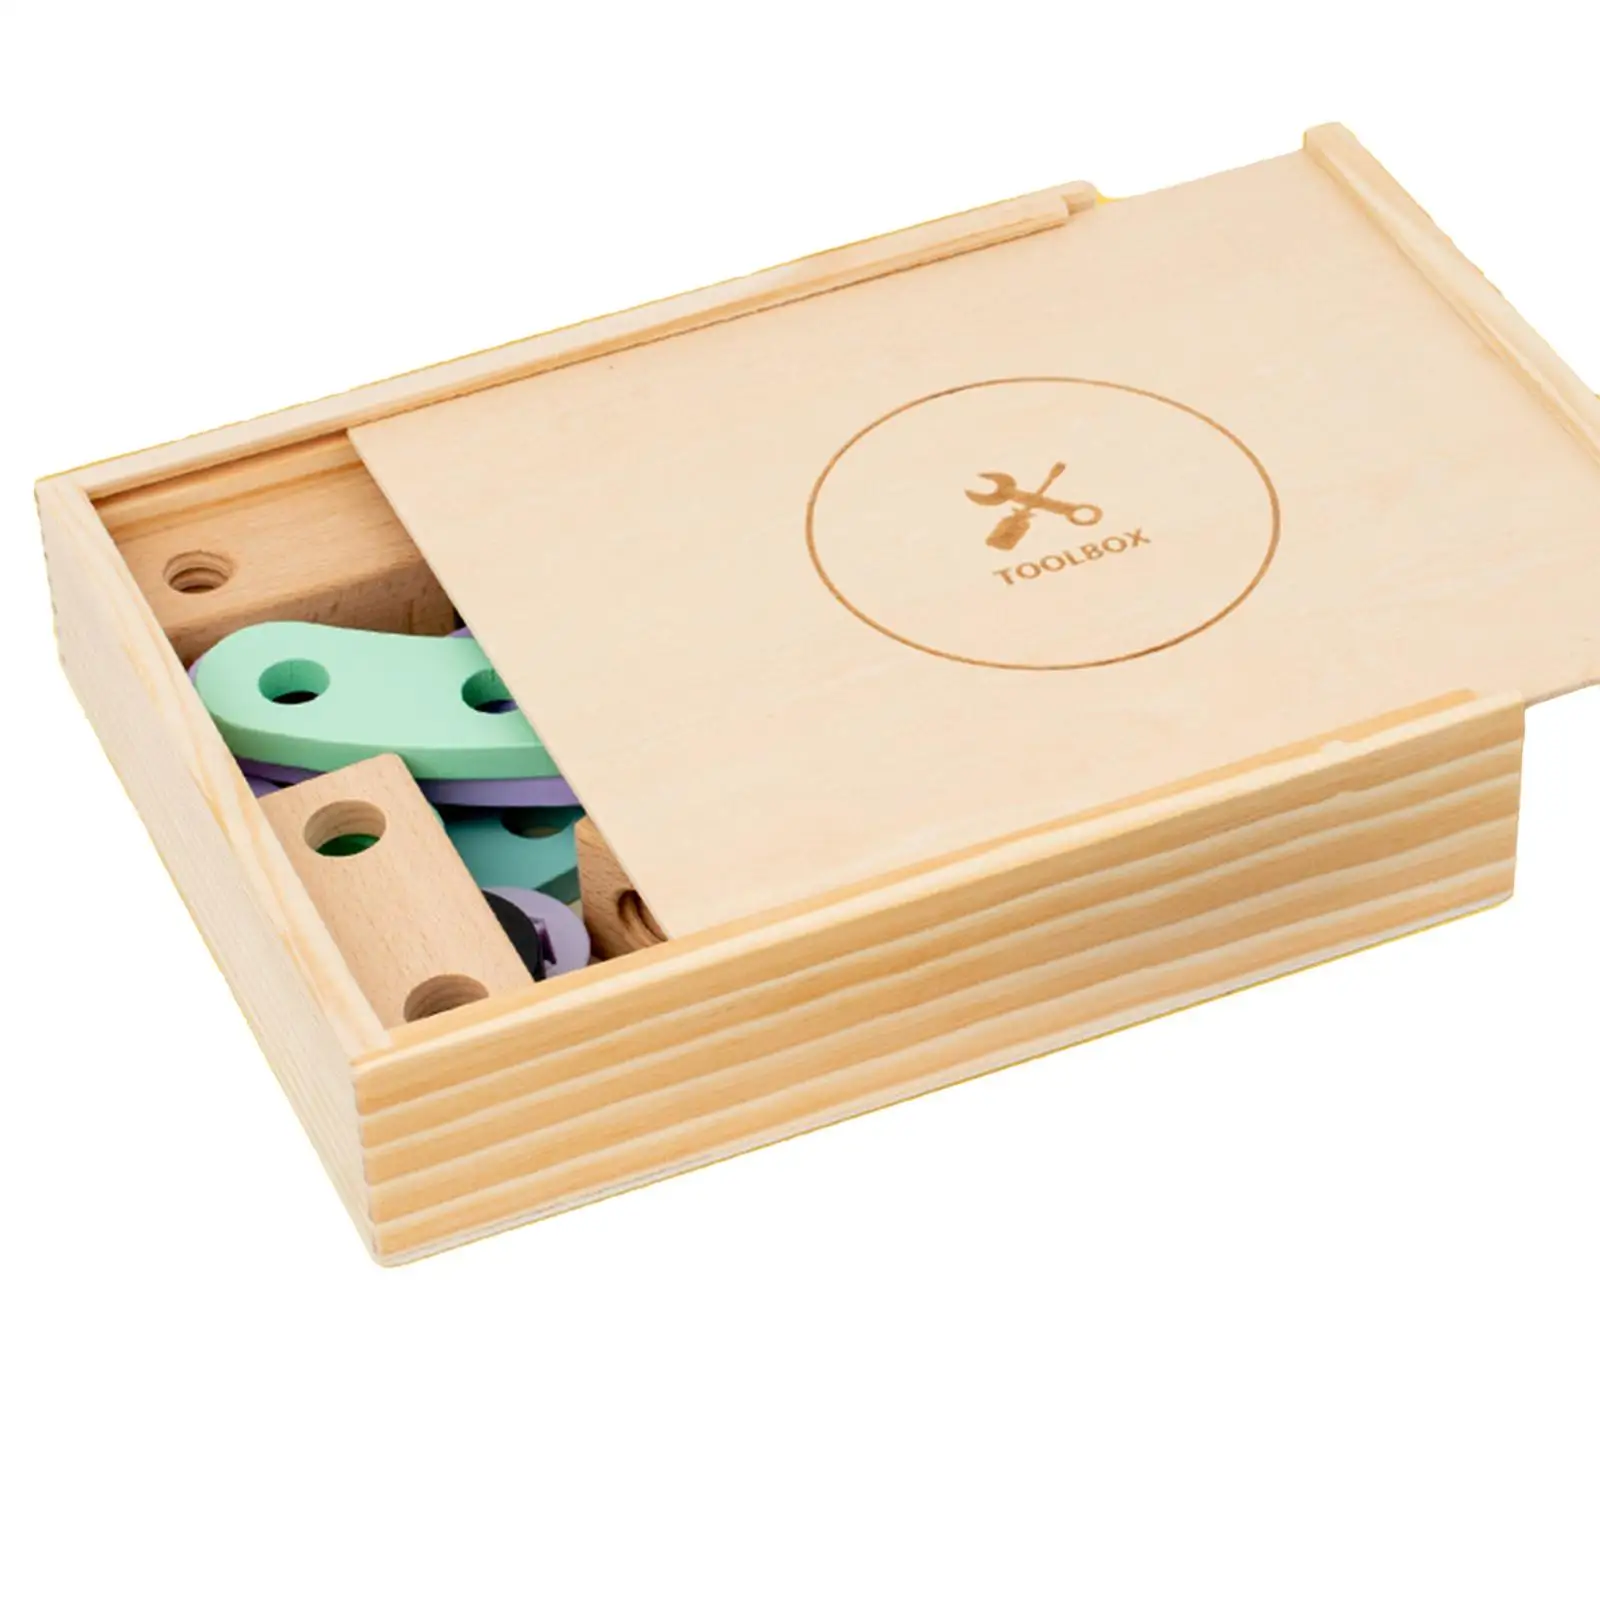 Wooden Repair Tool Box Toy Montessori Learning Toy DIY for Preschool Teens Girls Boys